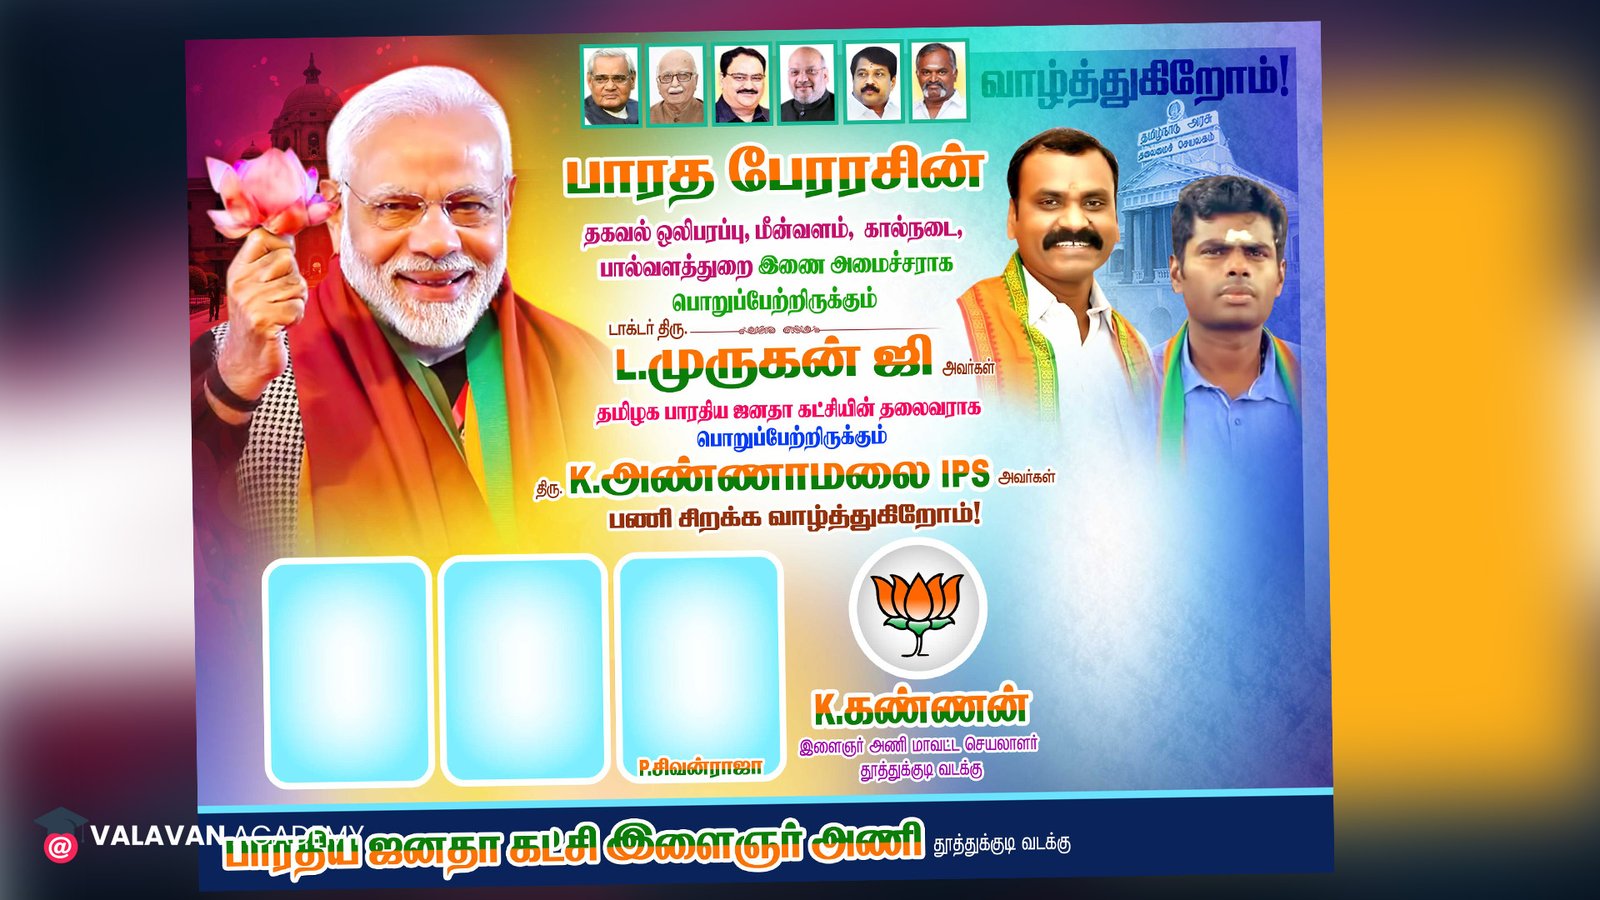 BJP Murugan Promotion PSD Free Download